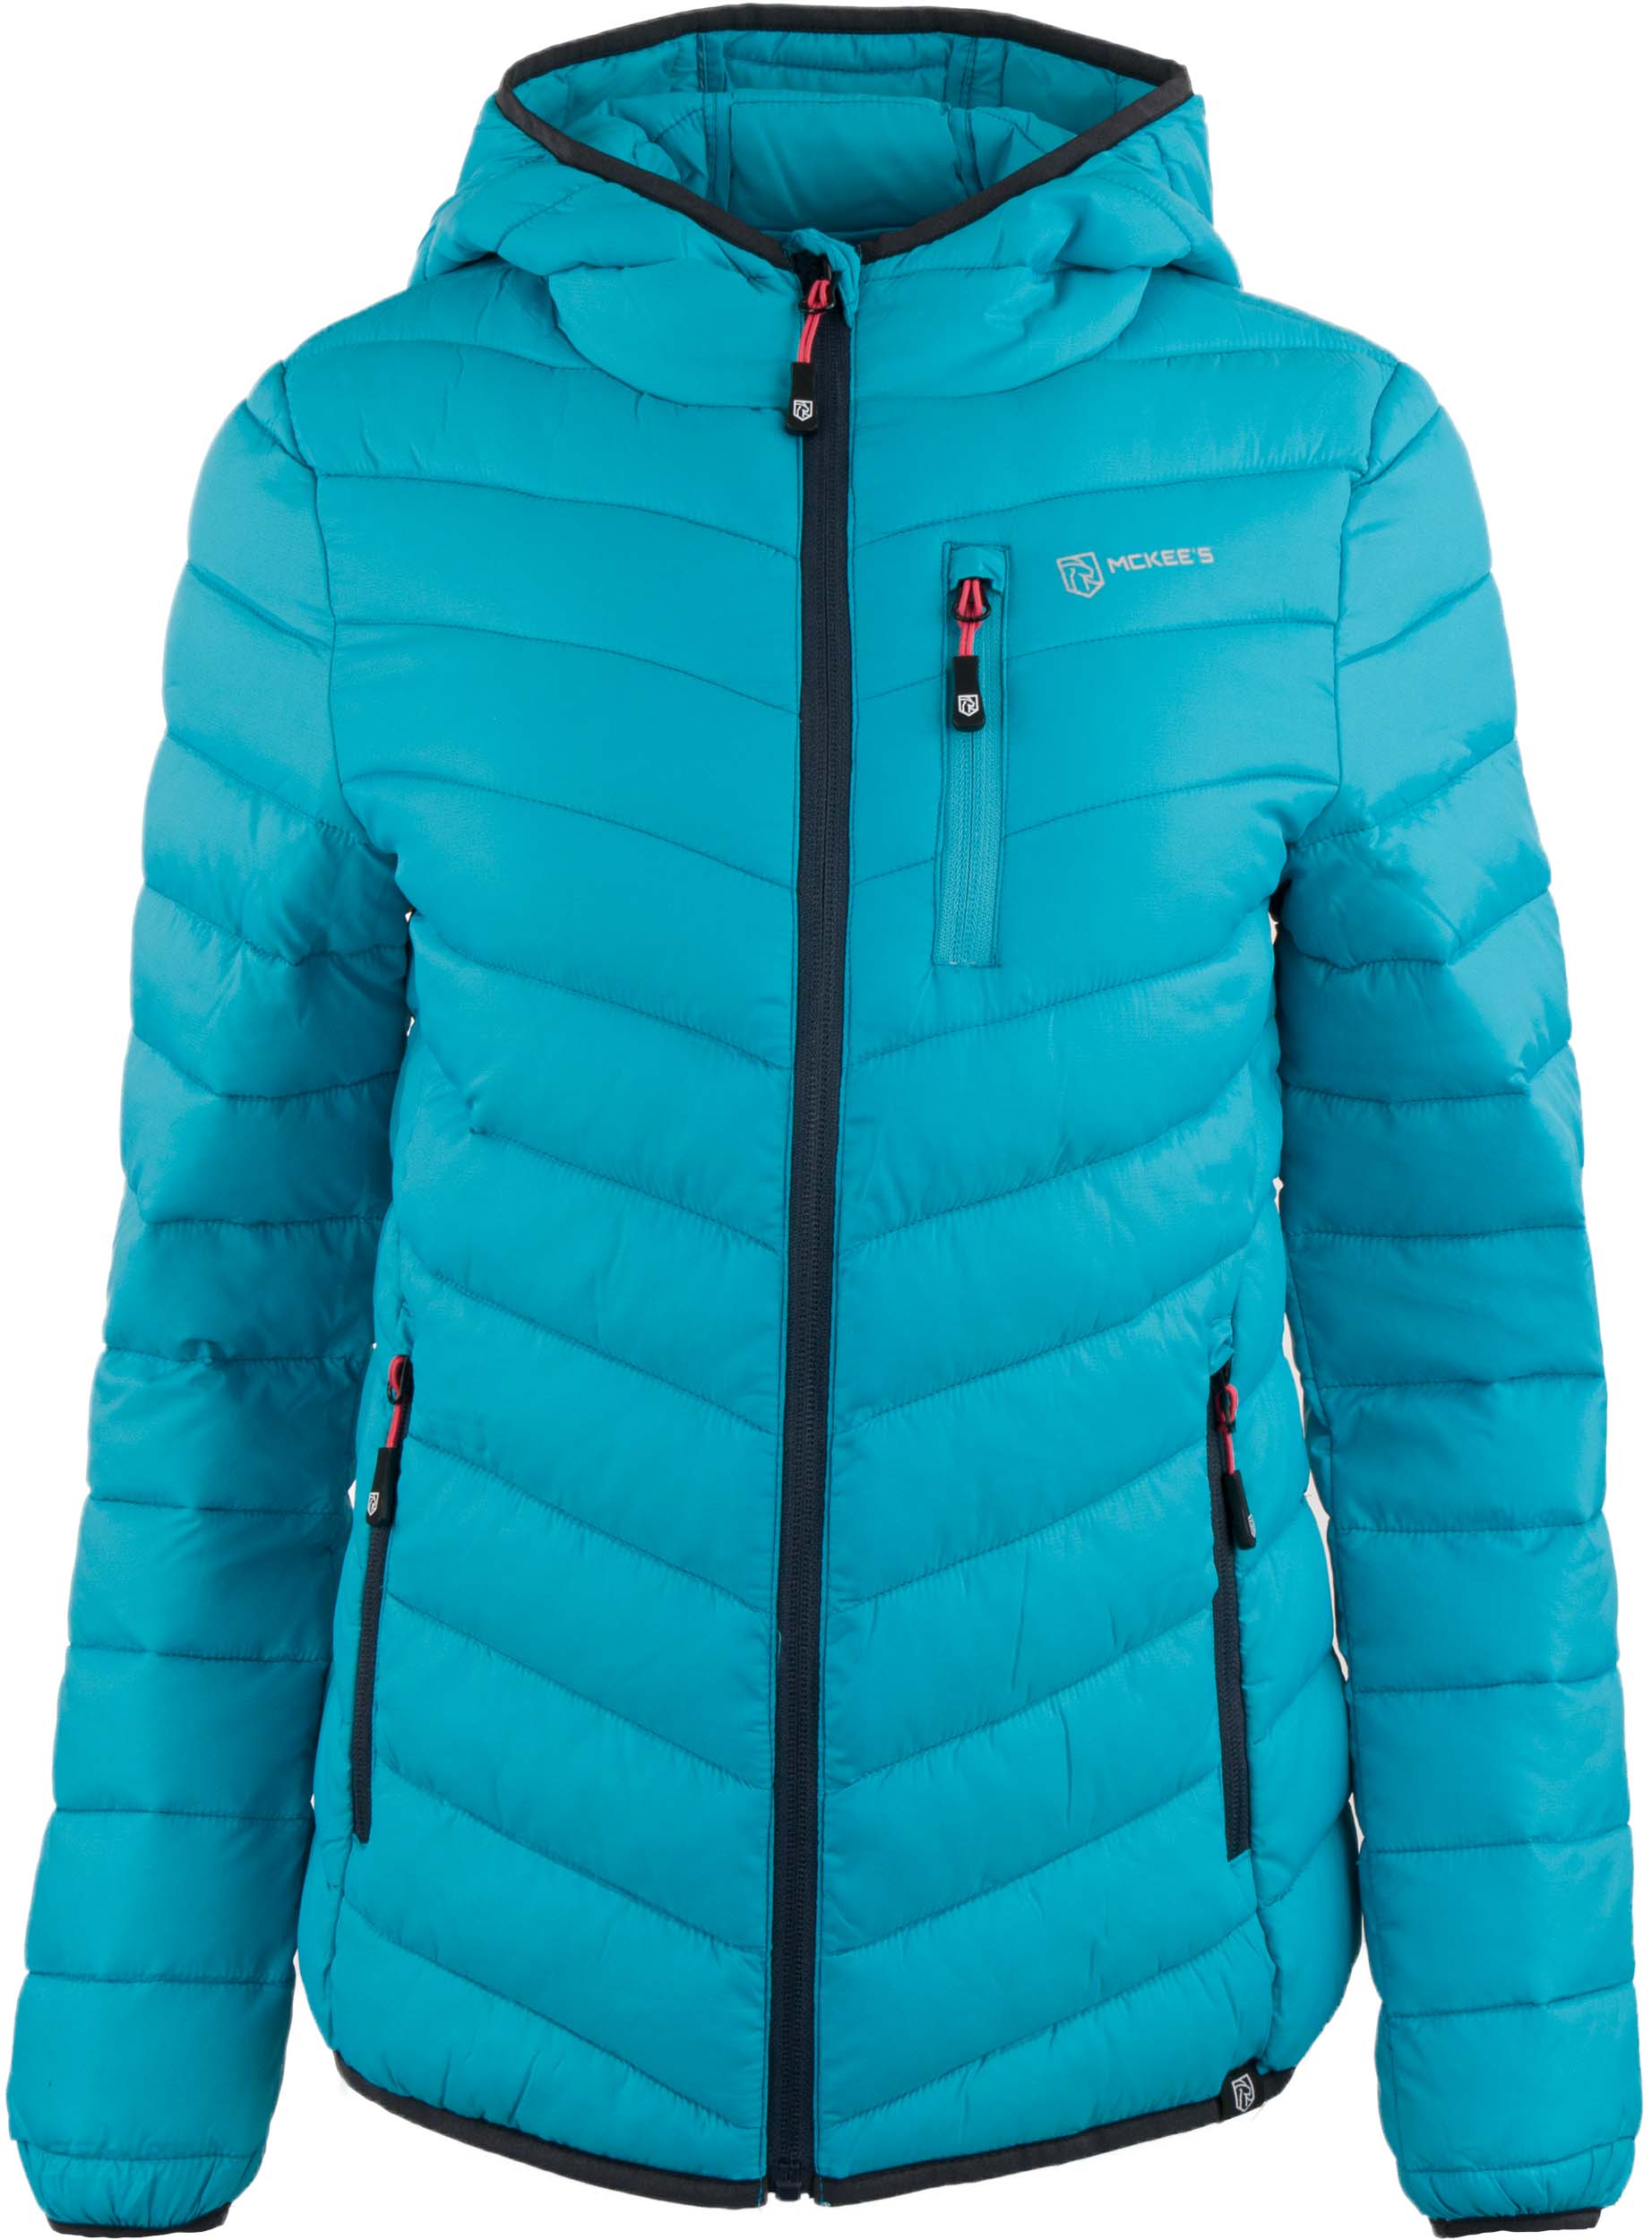 Dámská zimní bunda Mckees Terminillo turquoise|42-S